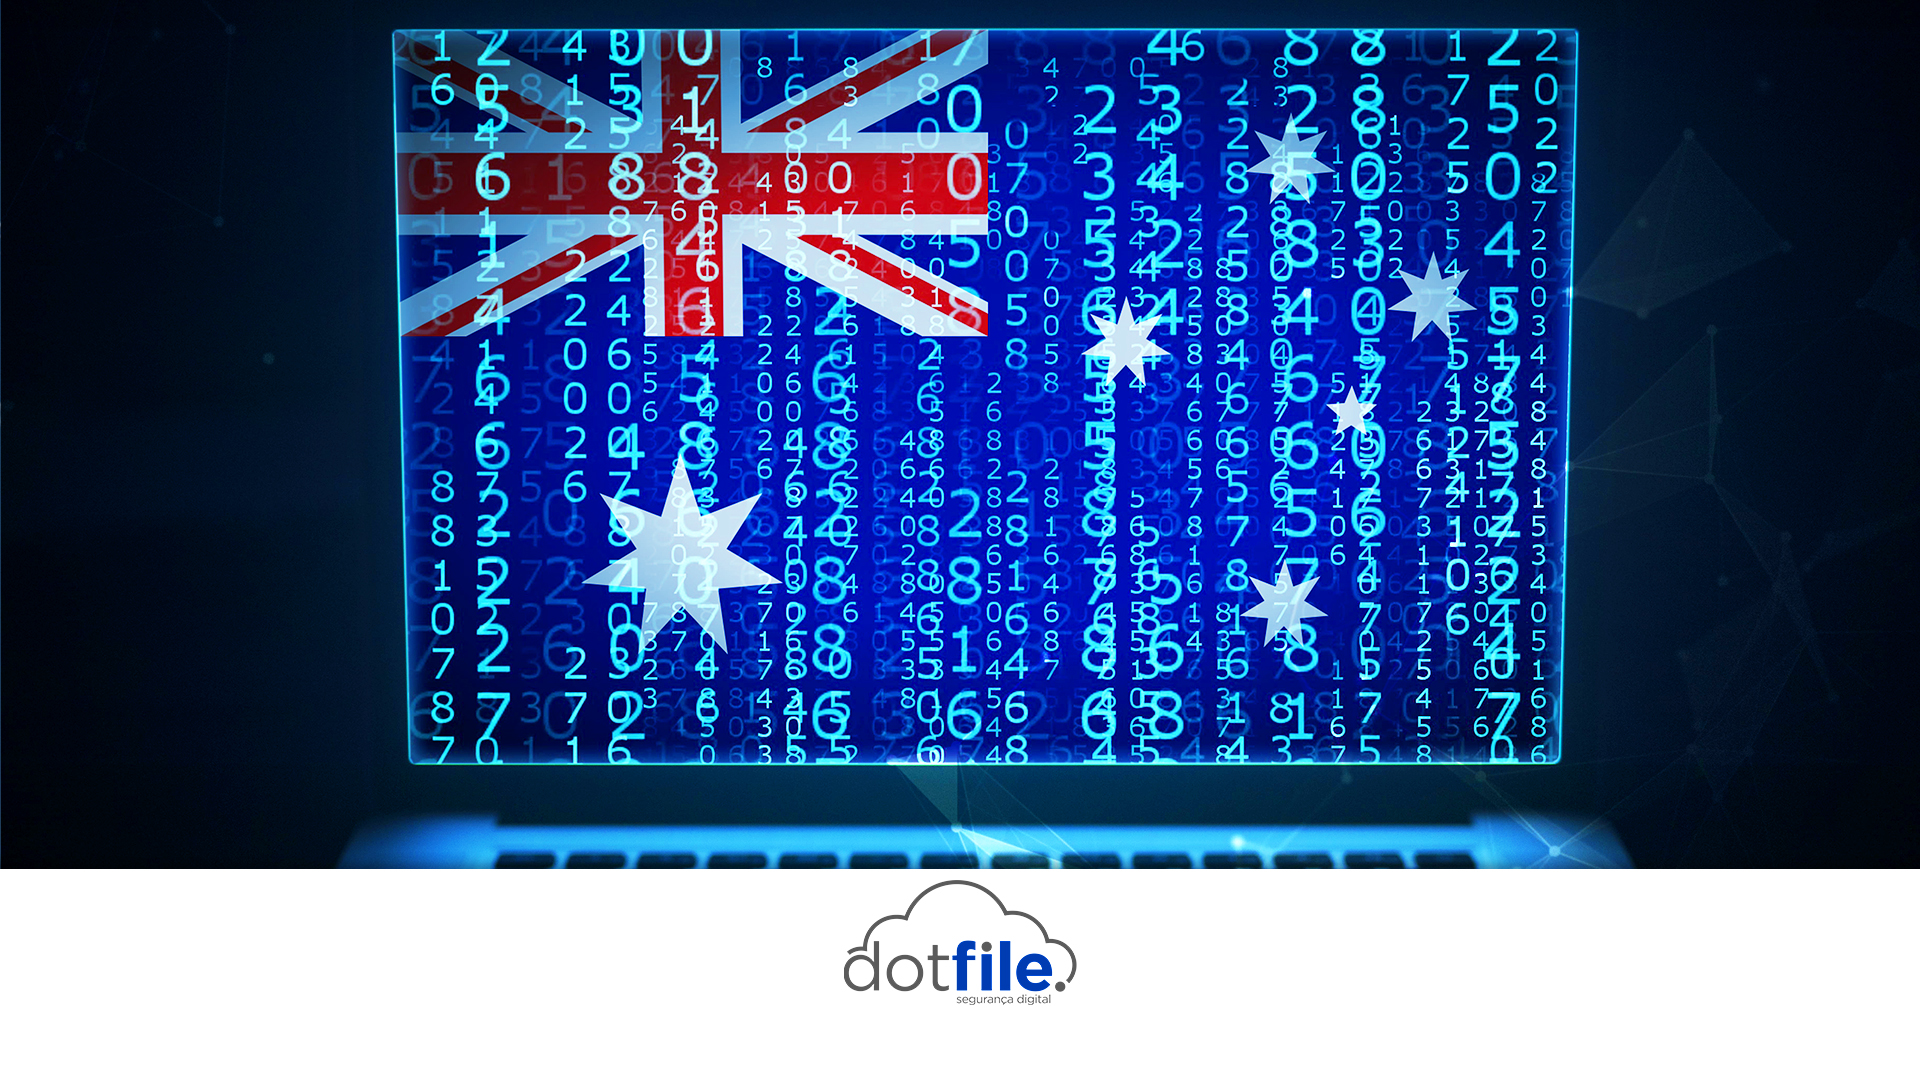 ataque hacker governo australia